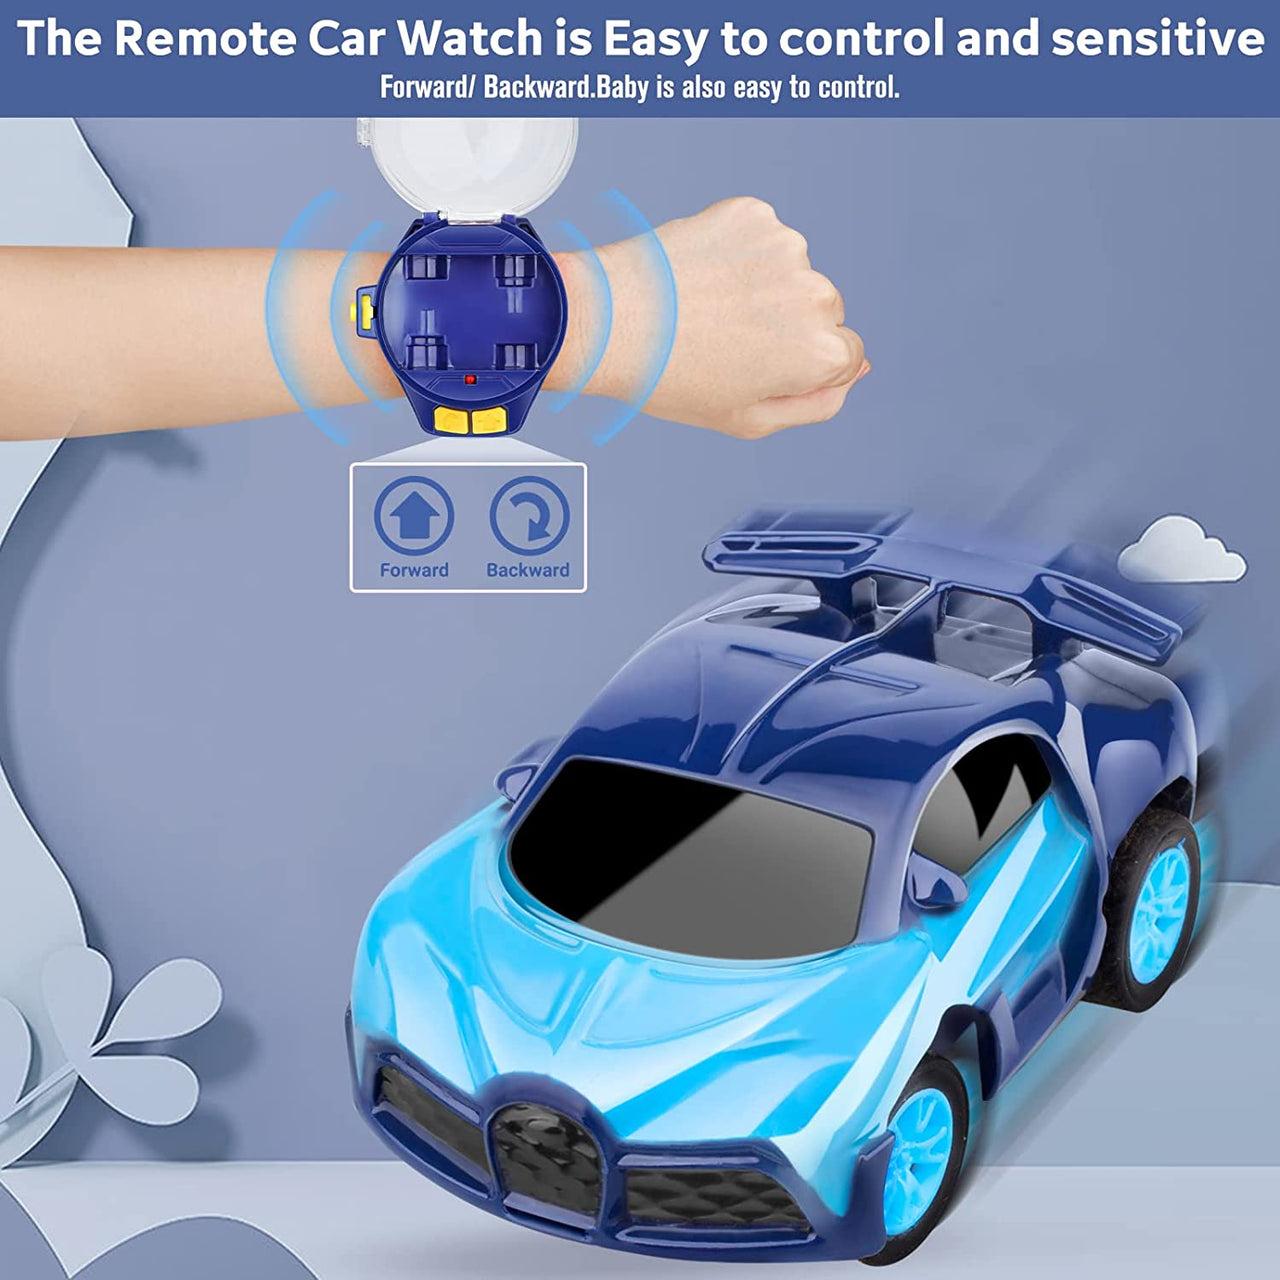 Wrist Watch Remote Control Car: Top Three Wrist Watch Remote Control Cars: A Comparison Table